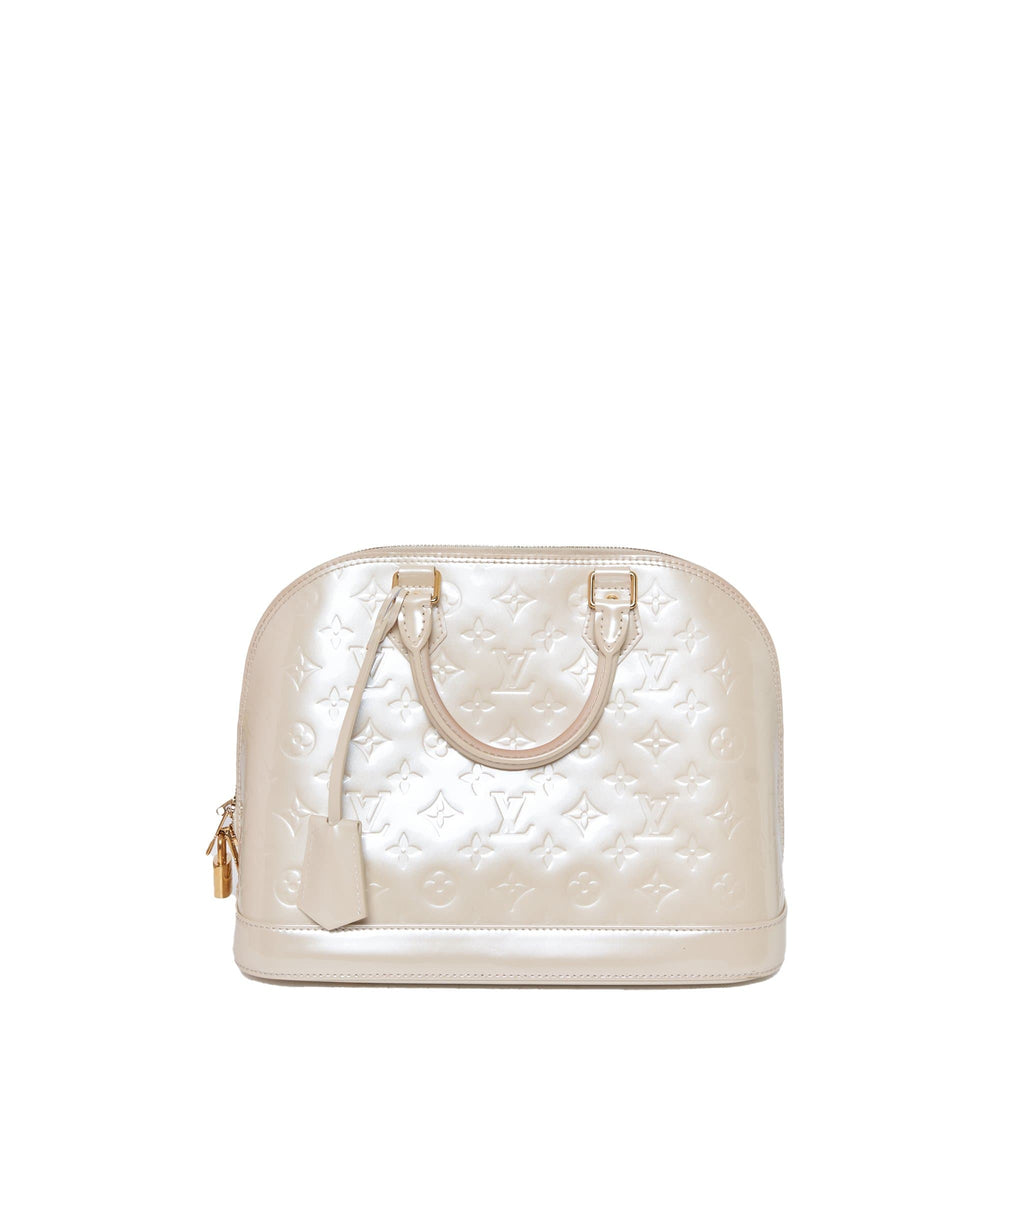 Louis Vuitton Alma MM Monogram Vernis Patent Leather Top Handle Bag on SALE